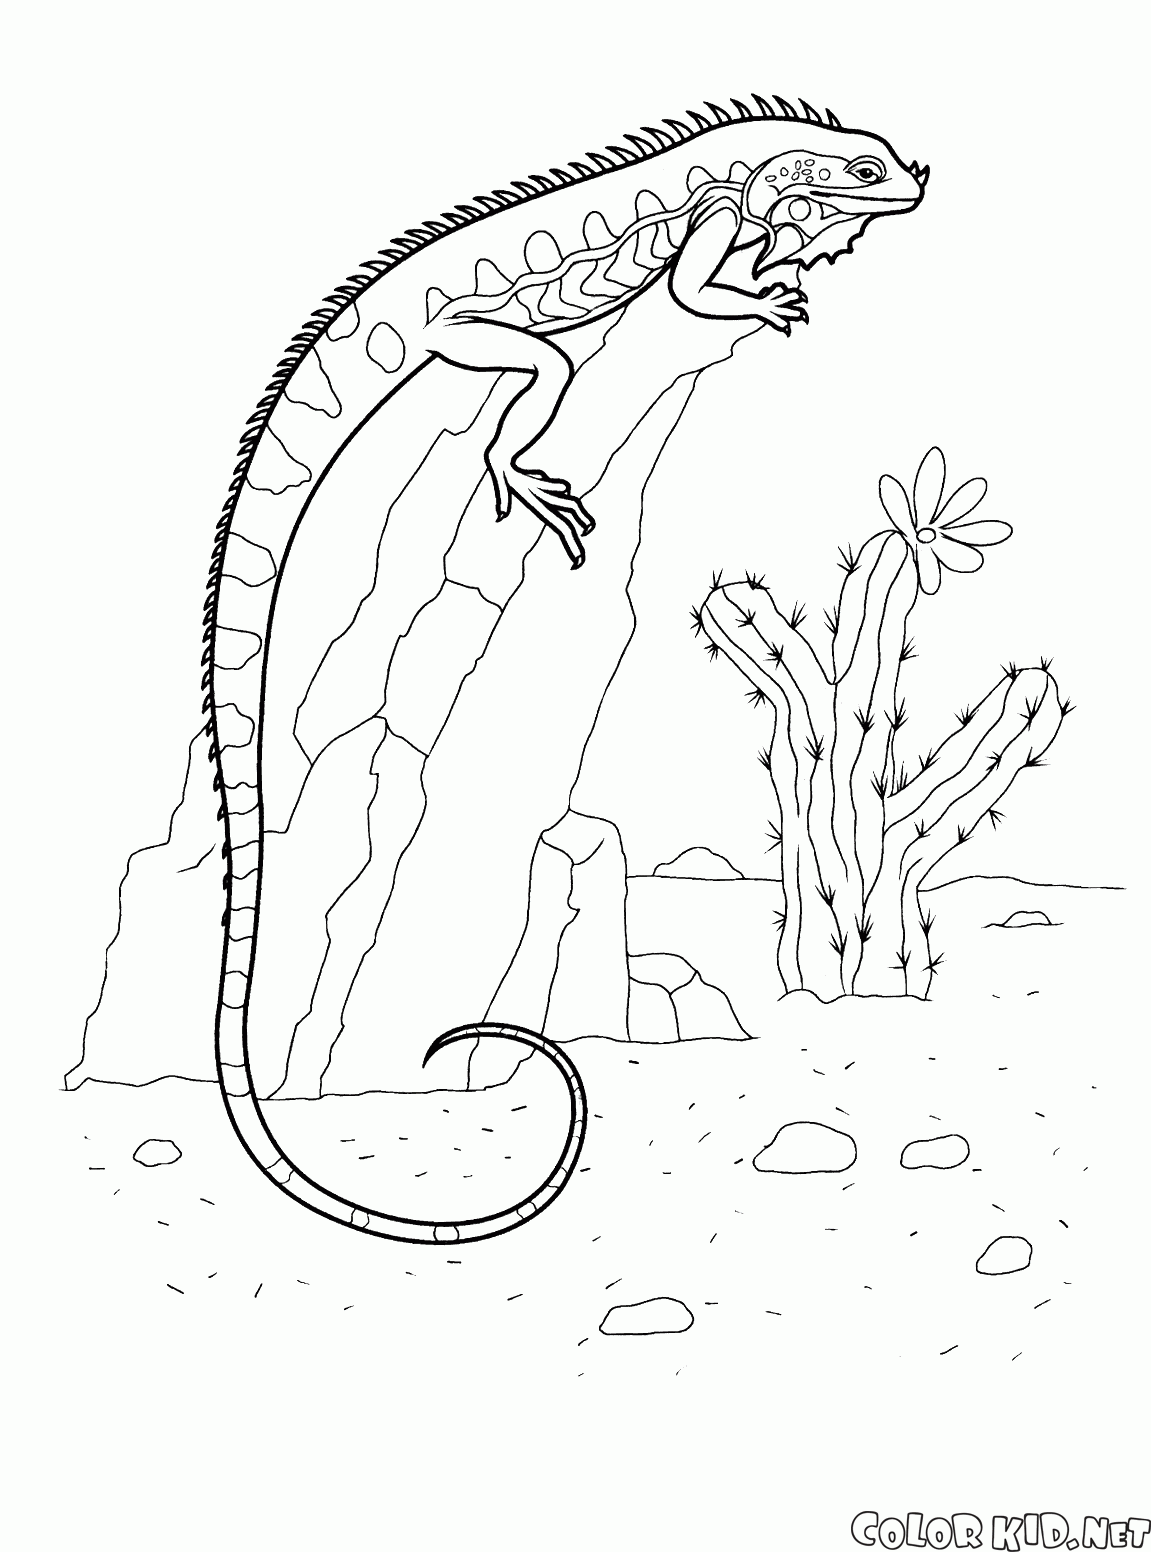 Iguana na skale